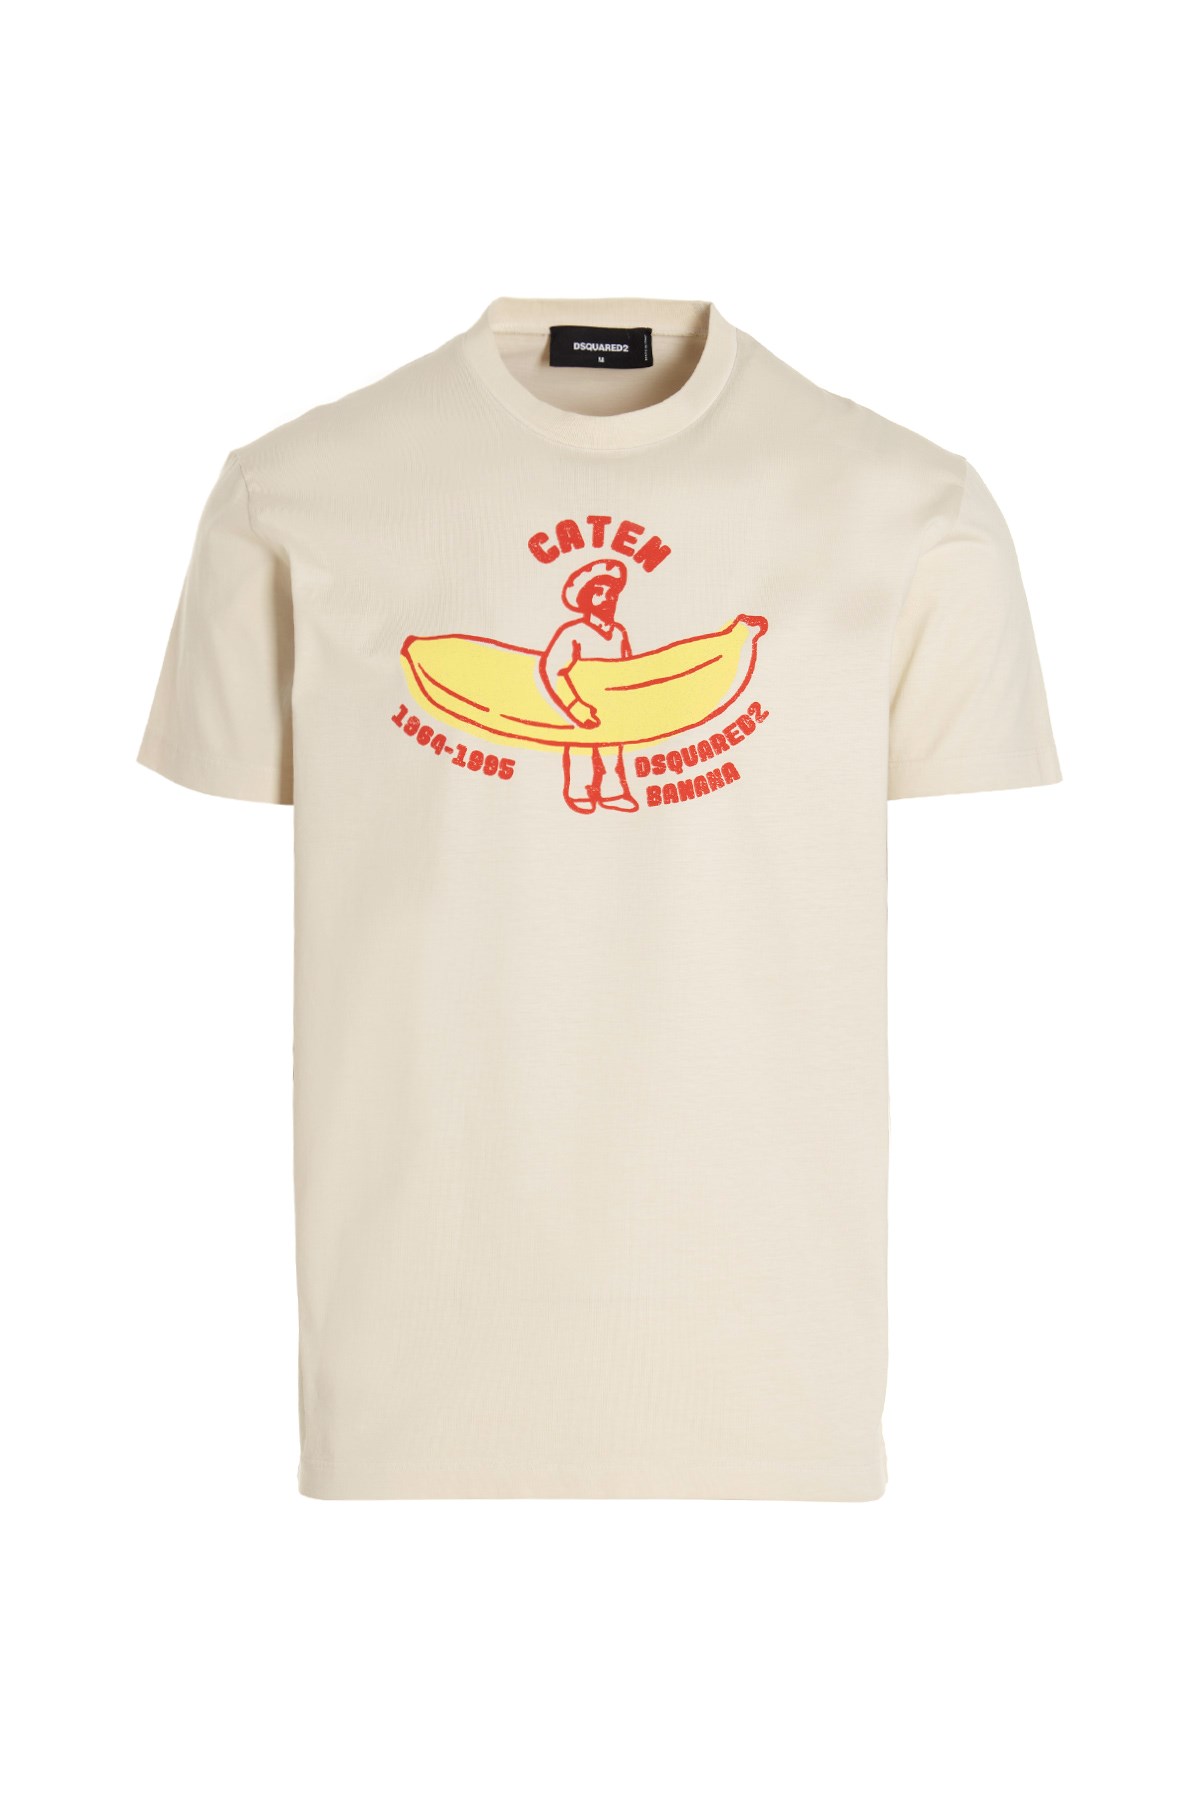 DSQUARED2 T-Shirt 'Going Bananas'